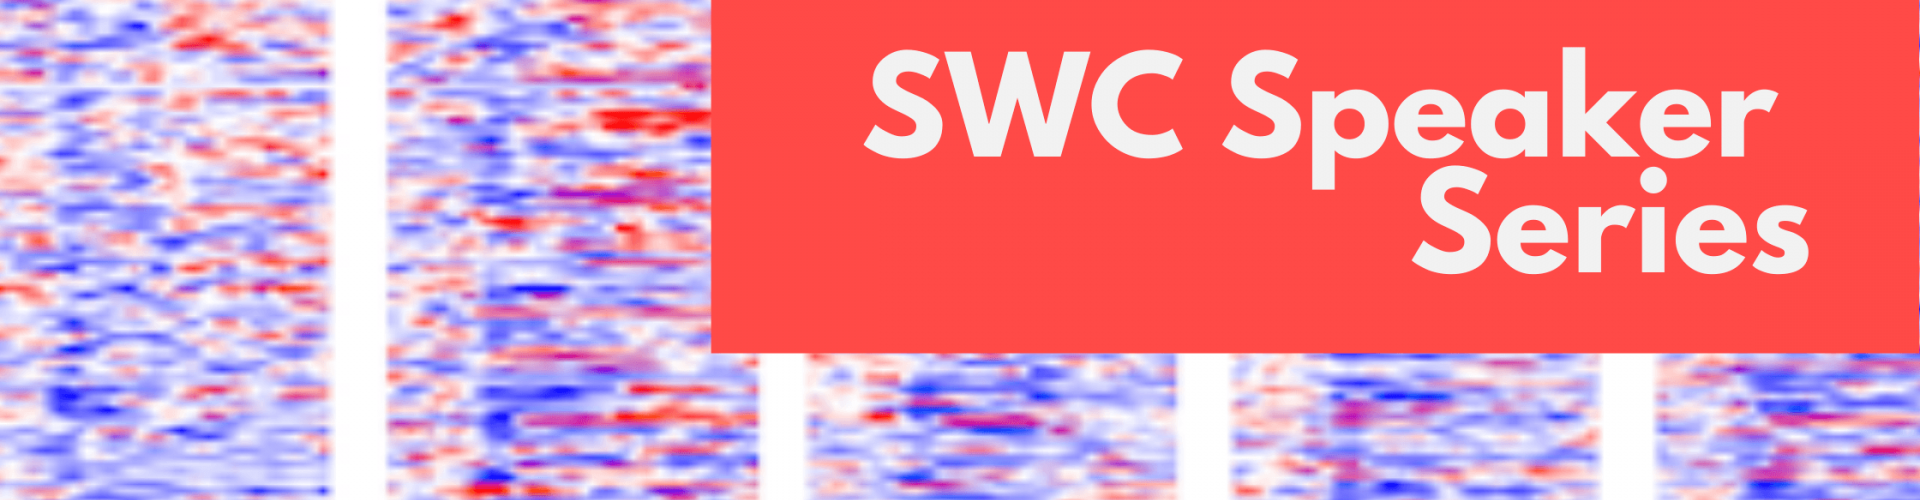 SWC Speaker Series banner